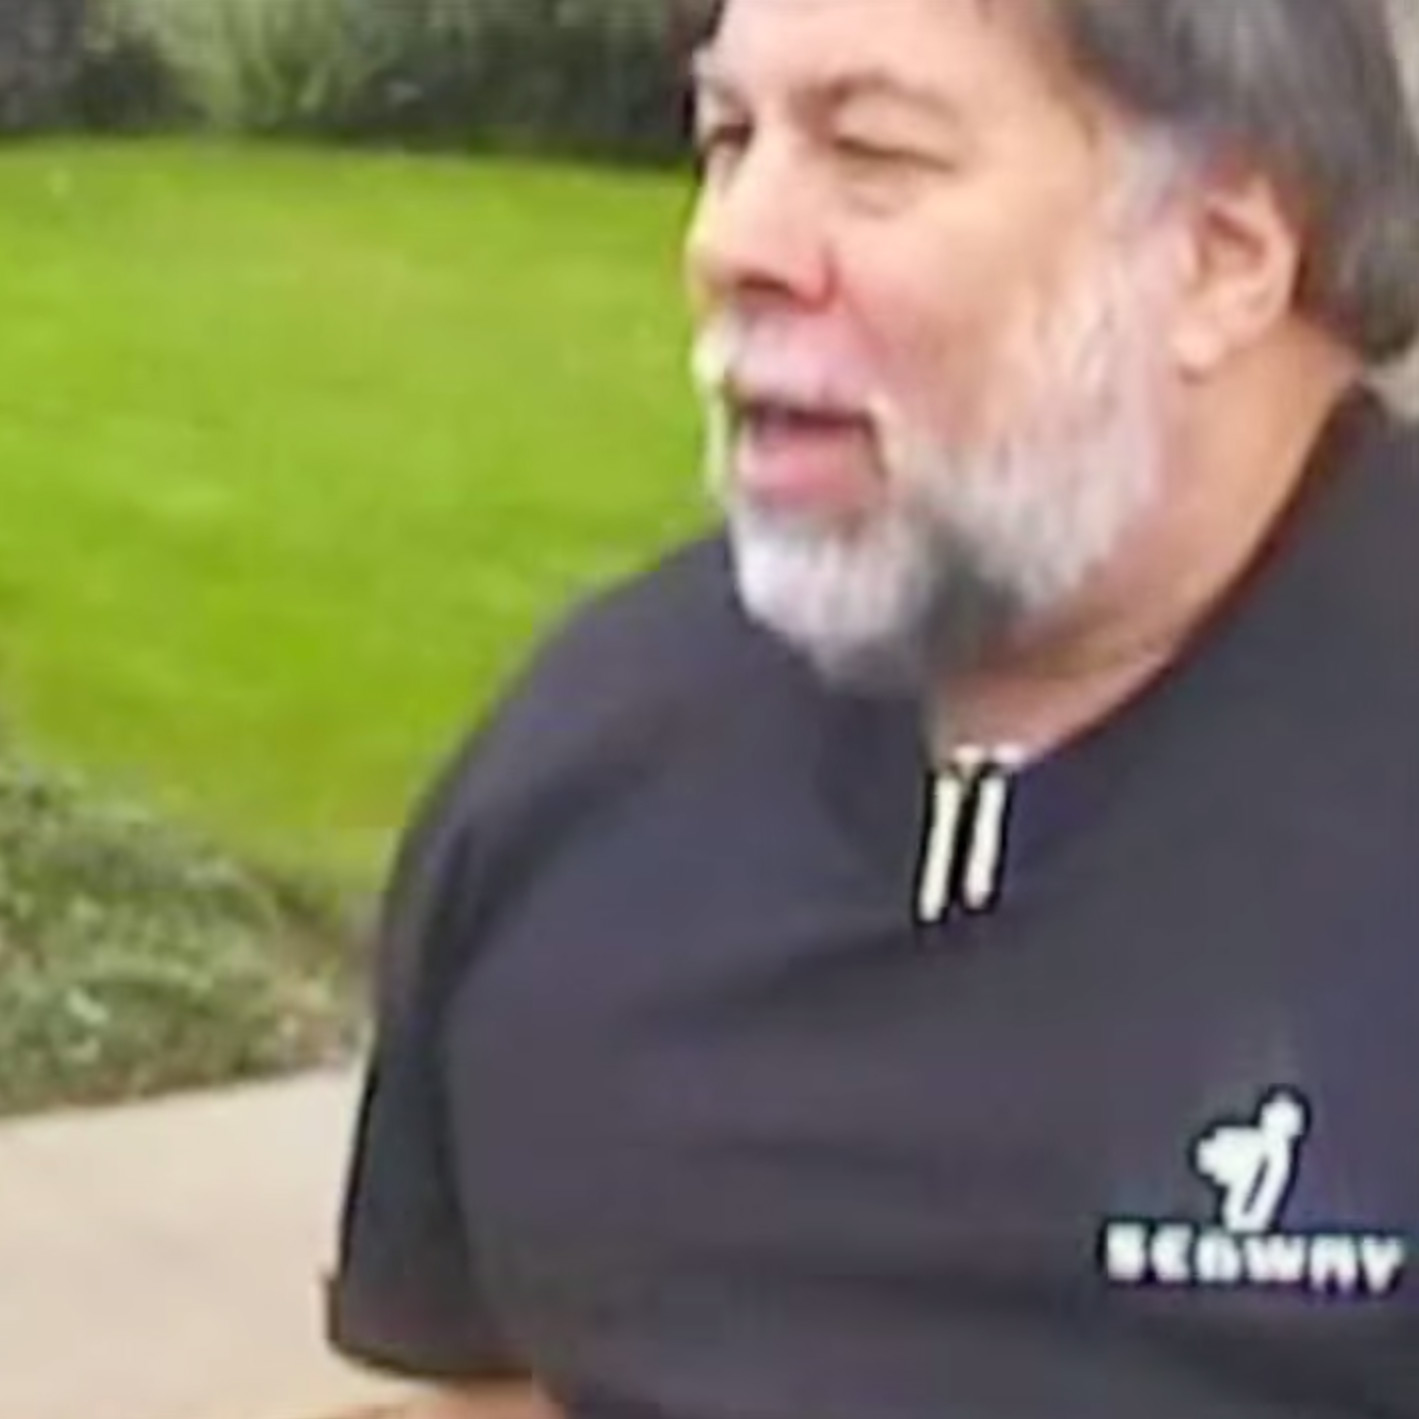 ↪ Video: girl receives an iMac as a gift from Steve Wozniak